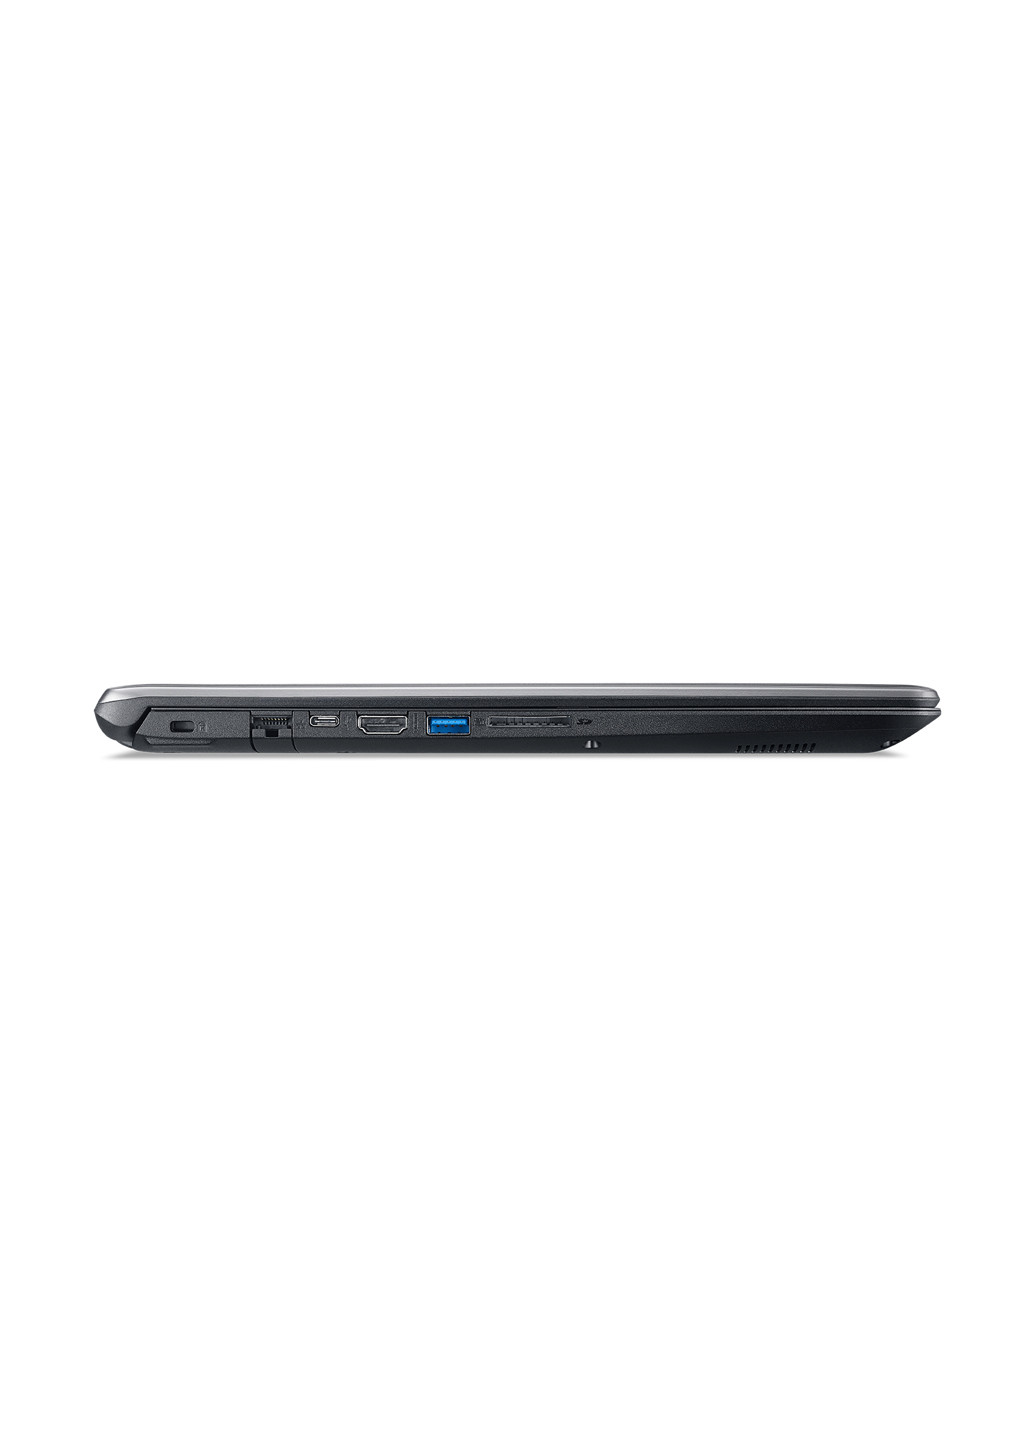 Ноутбук Acer aspire 5 a515-51g (nx.gw1eu.010) iron (134076200)